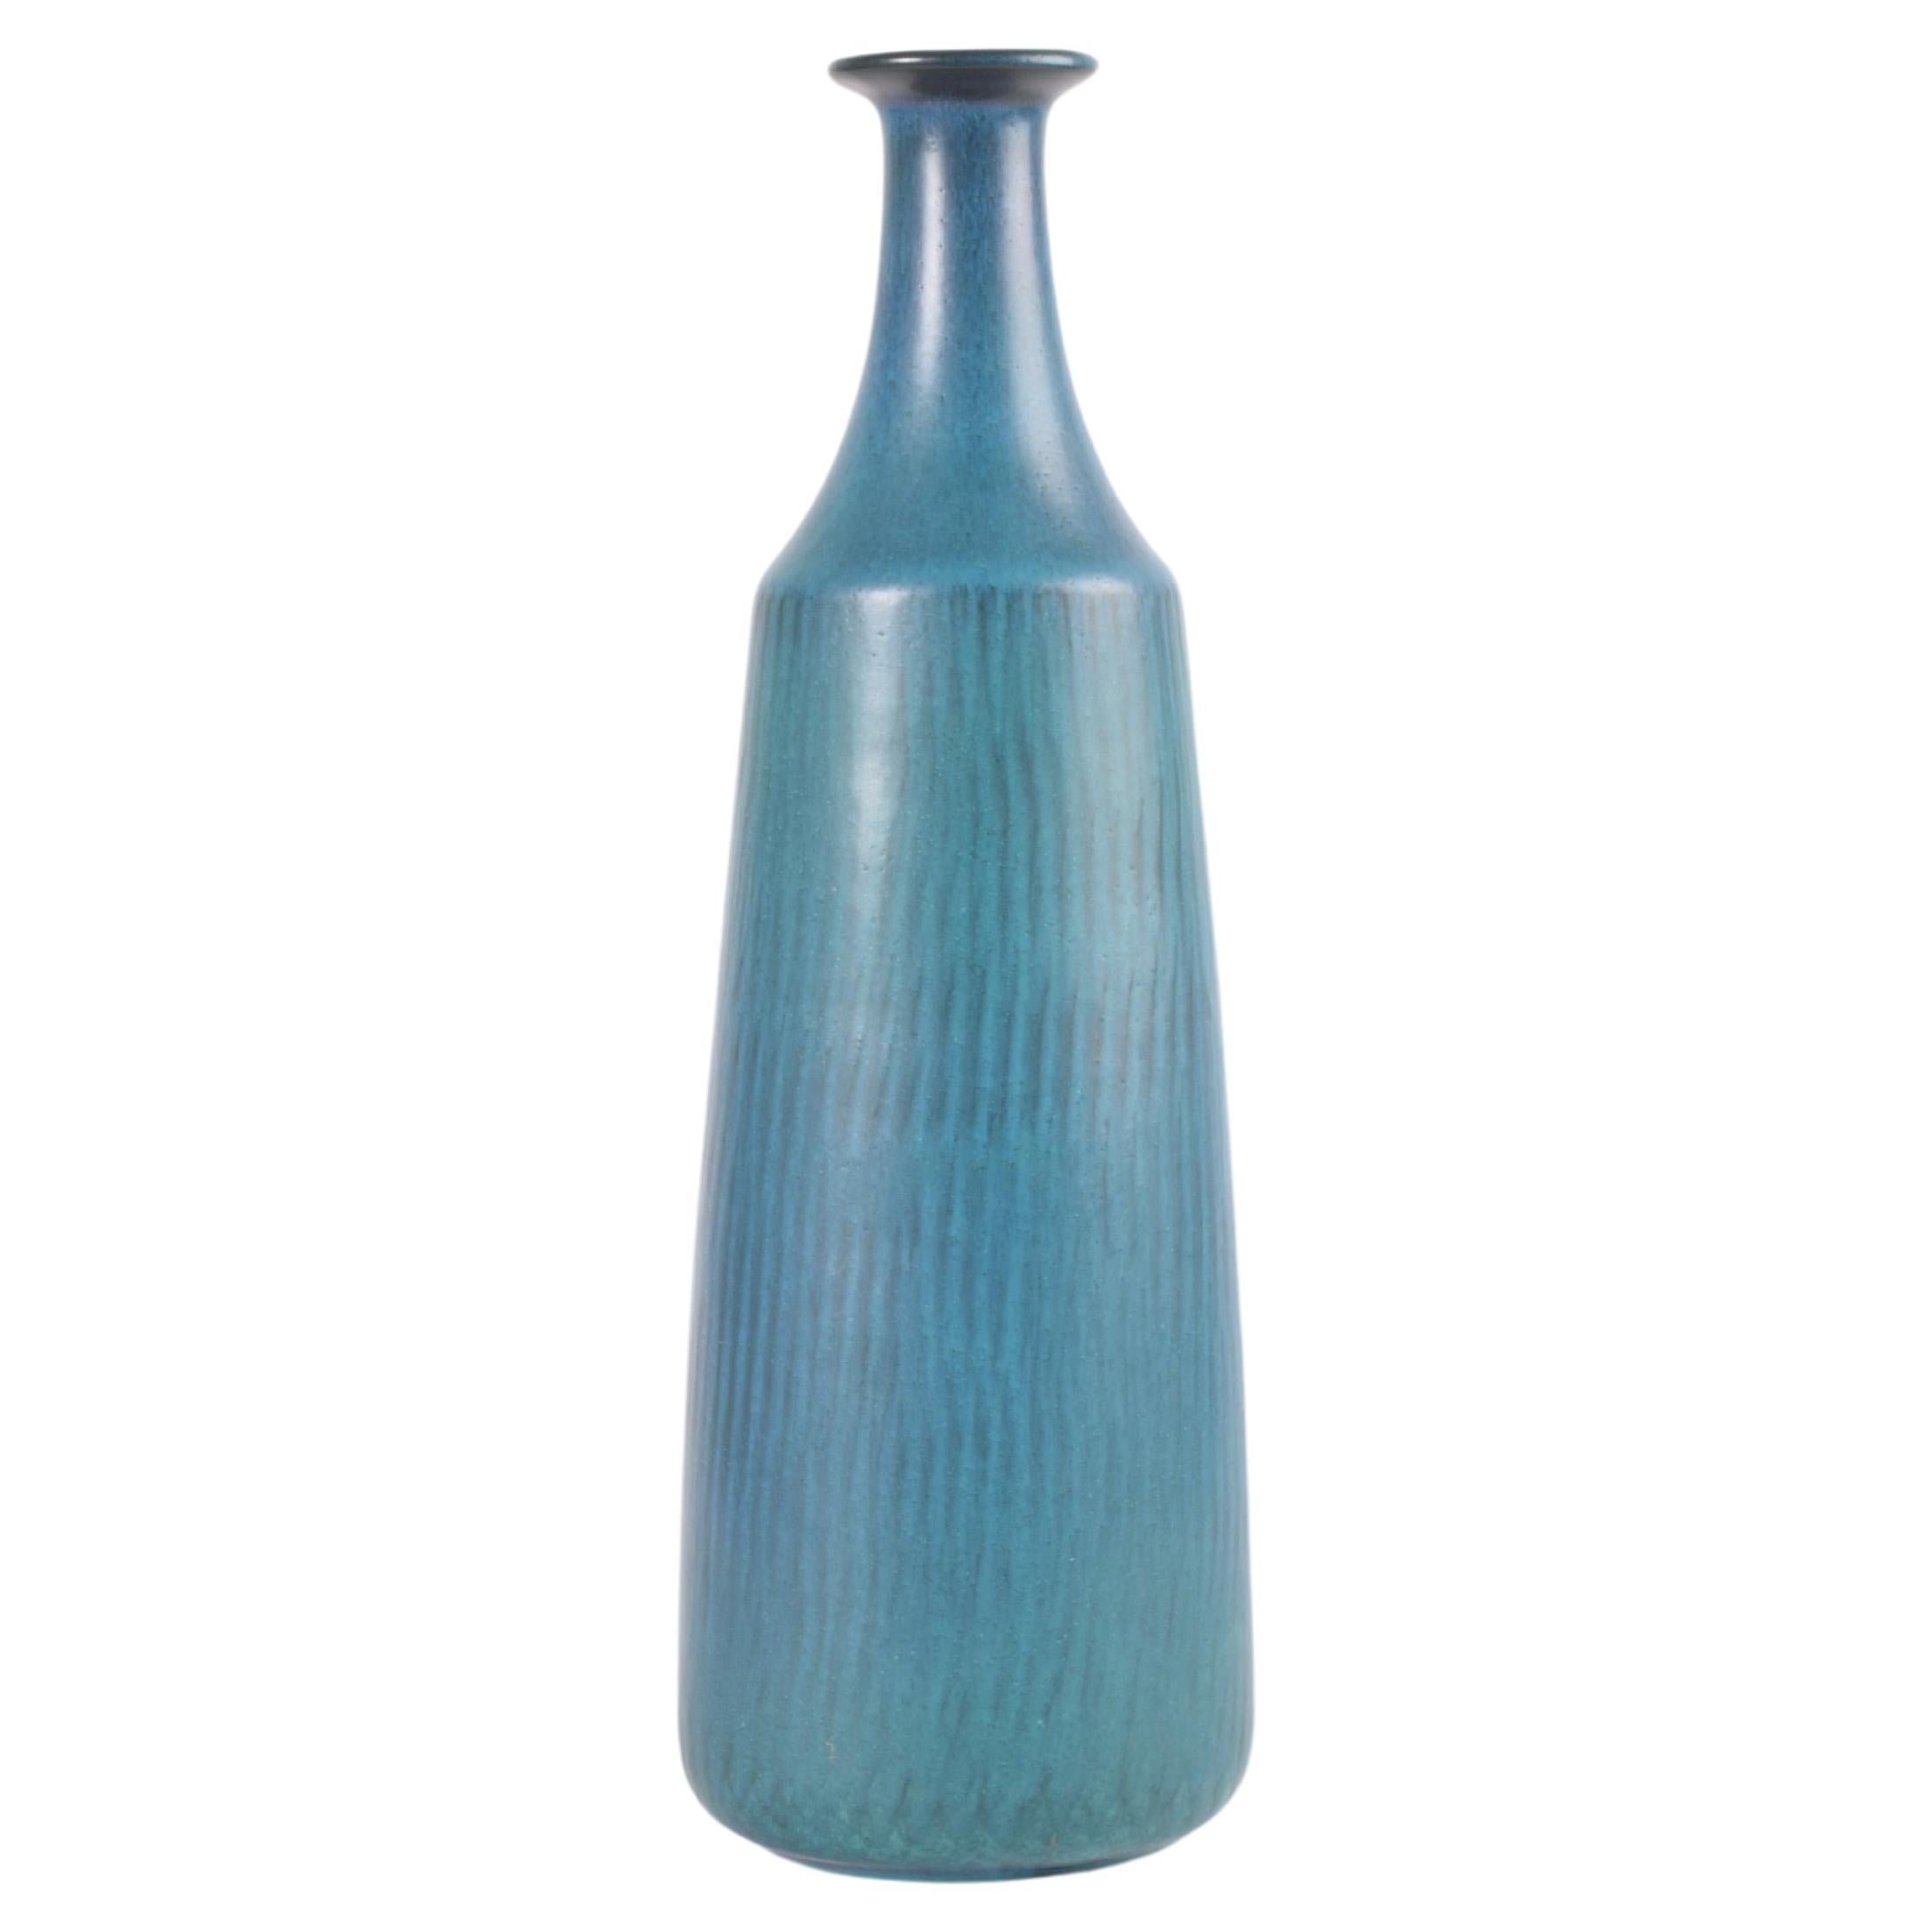 Gunnar Nylund for Nymølle Tall Vase Turquoise Blue, Scandinavian Modern 1960s